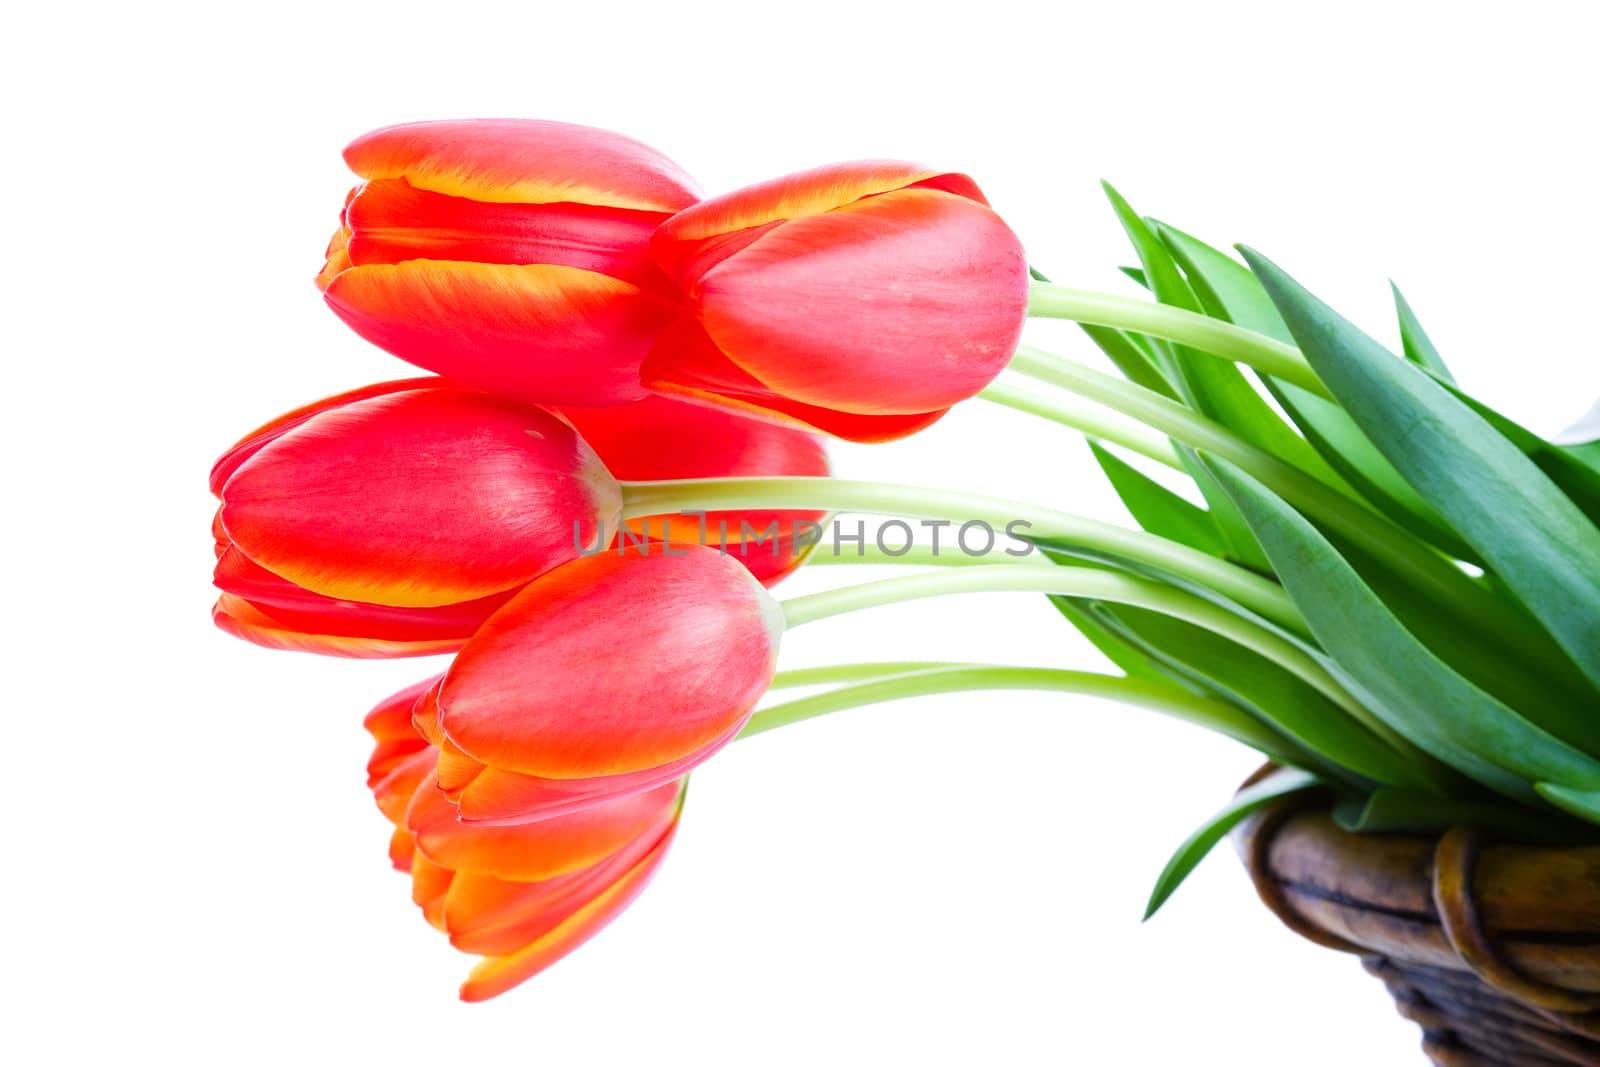 Tulips in Basket by songbird839